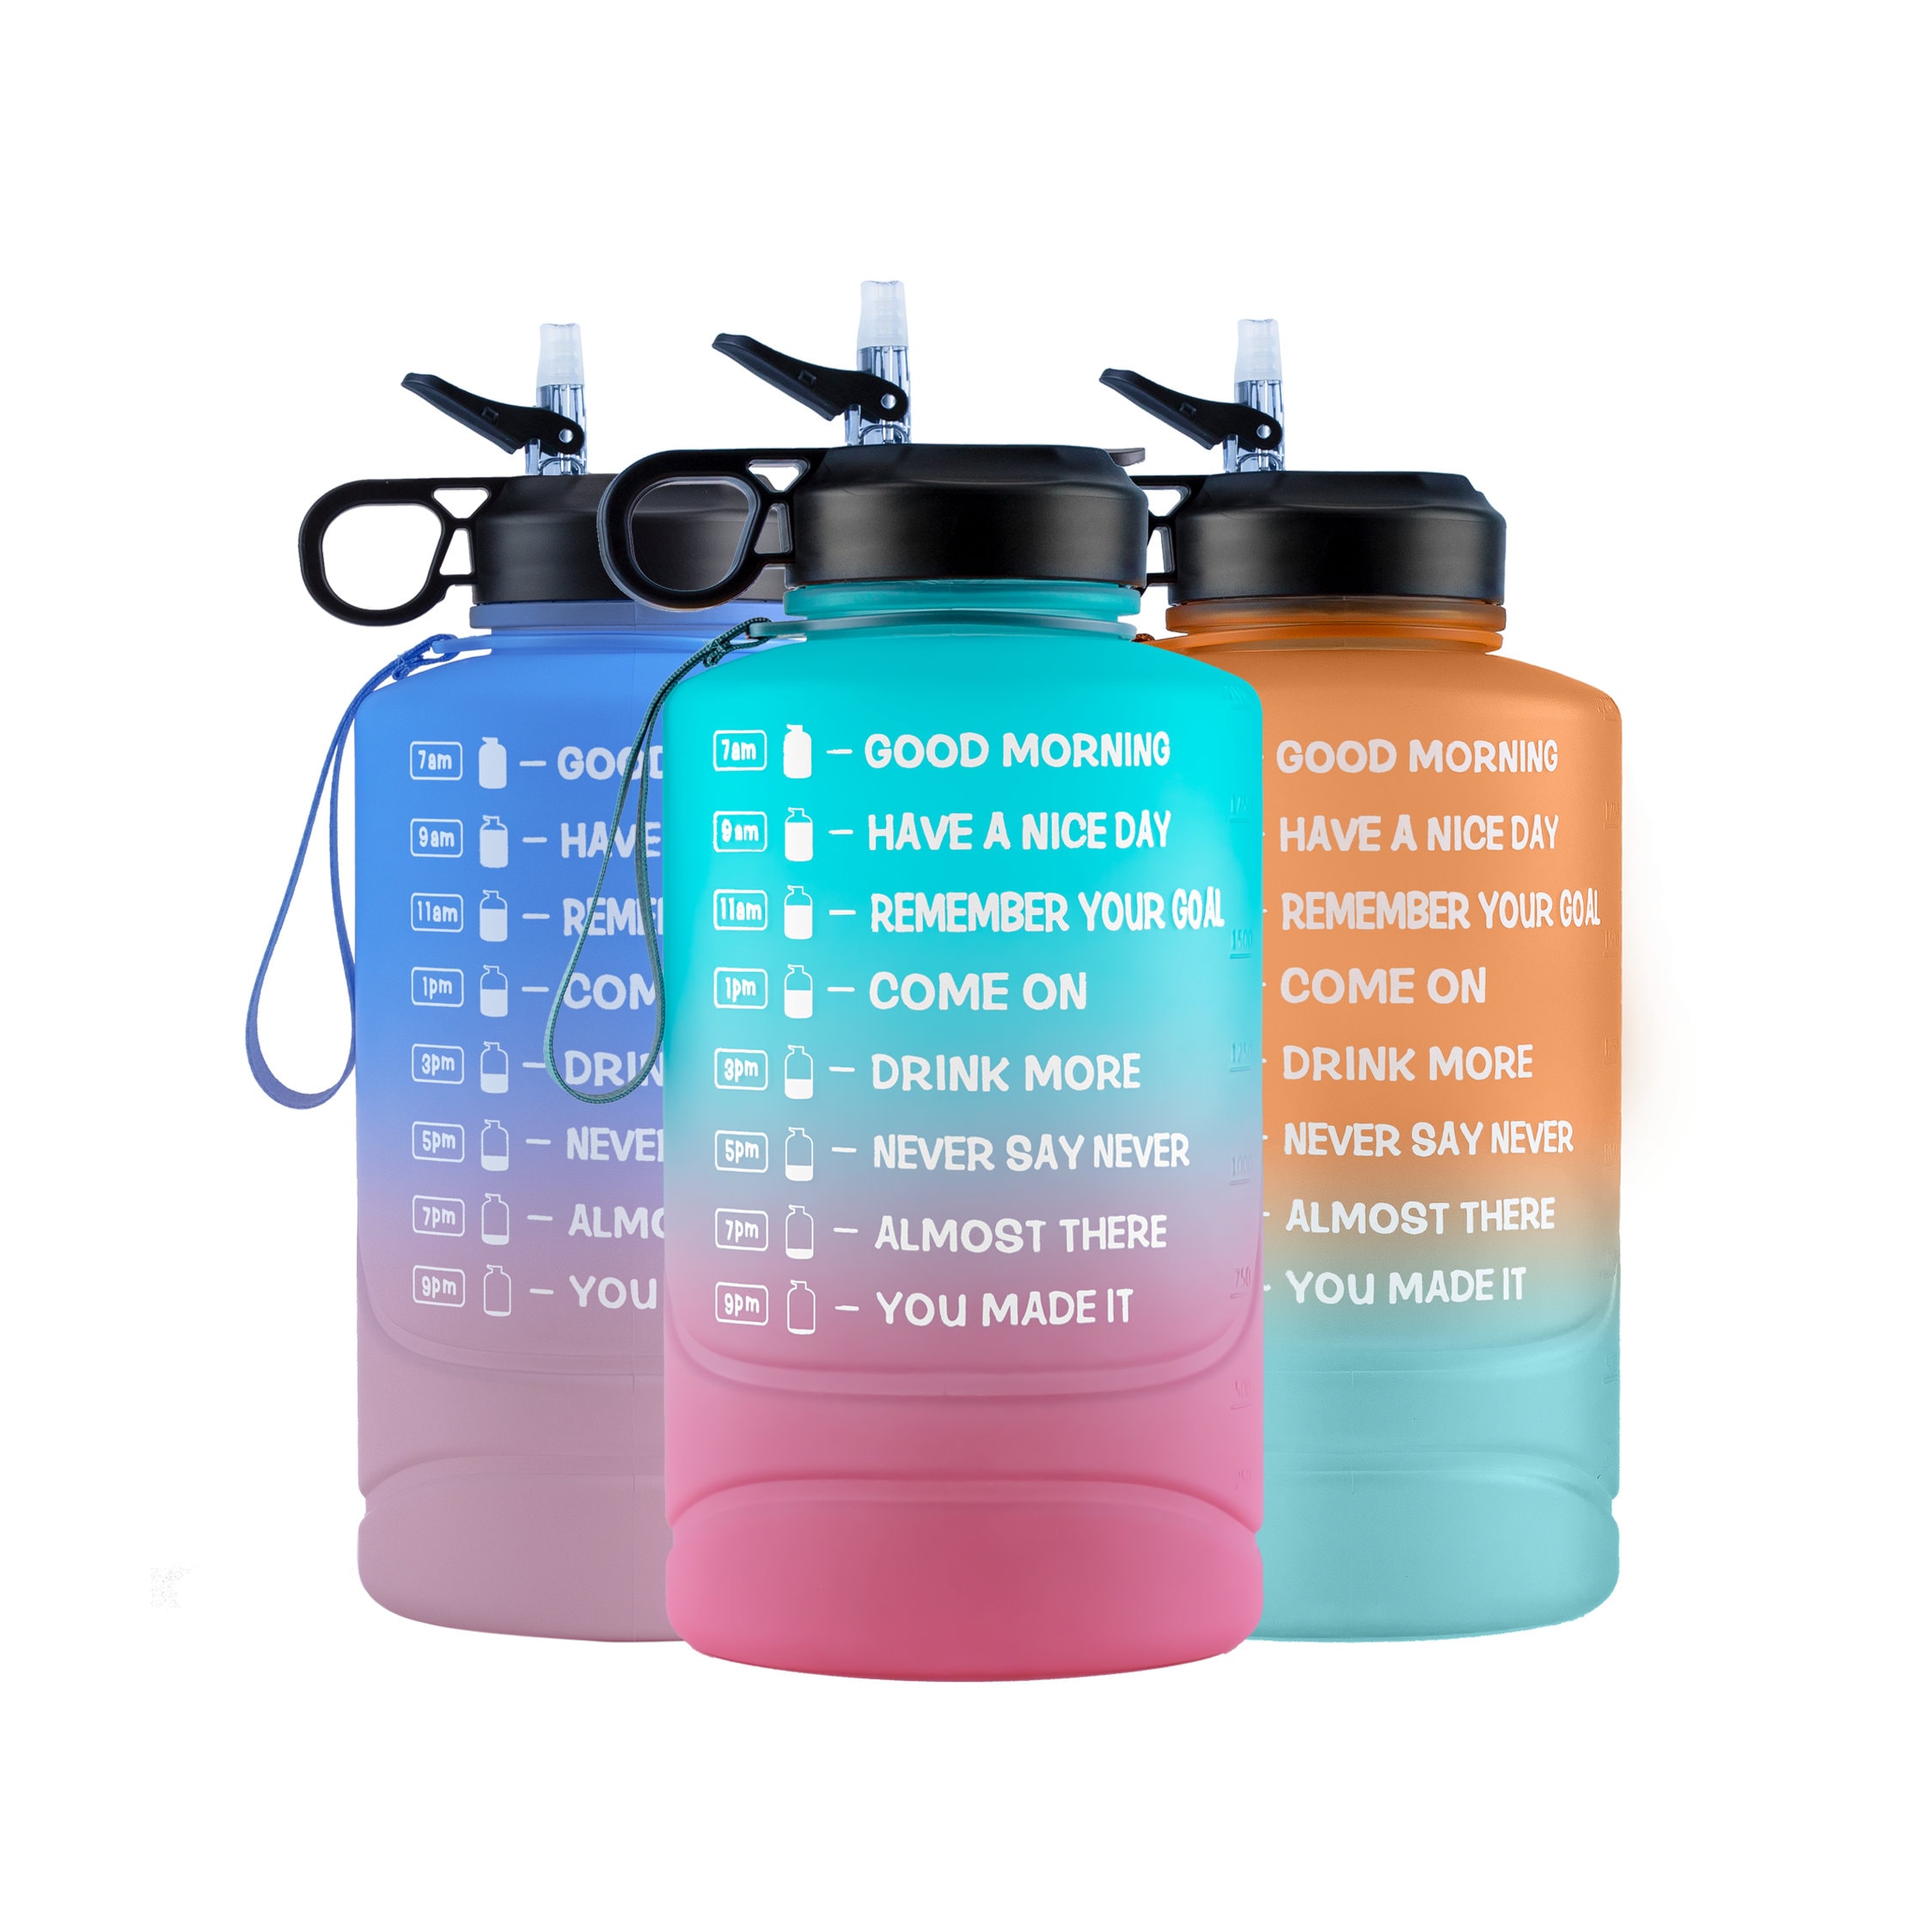 1100ml Sports Water Bottle with Time Marker BPA Free & Leak proof